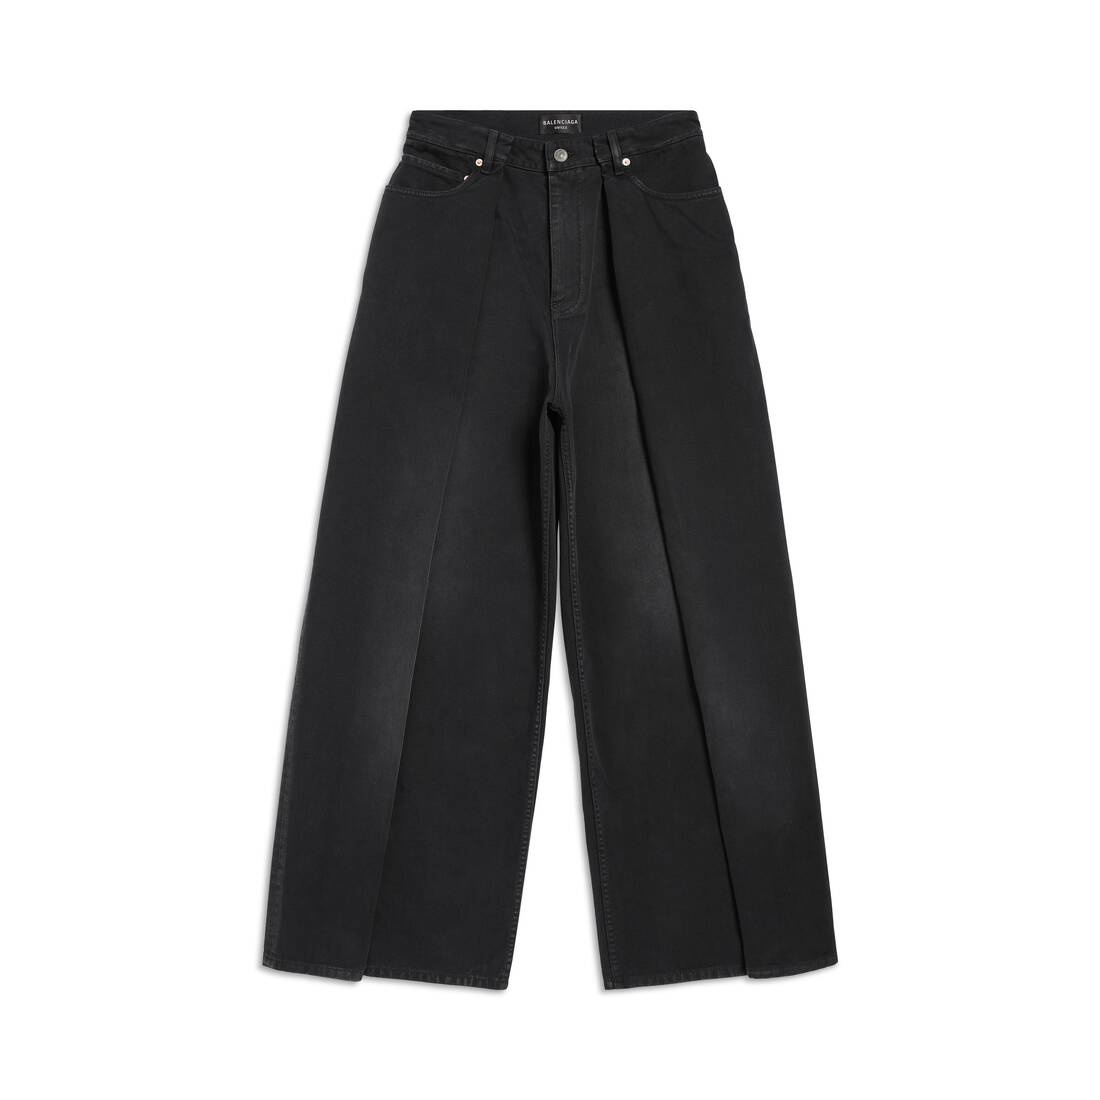 Double Side Pants in Black Faded - 1